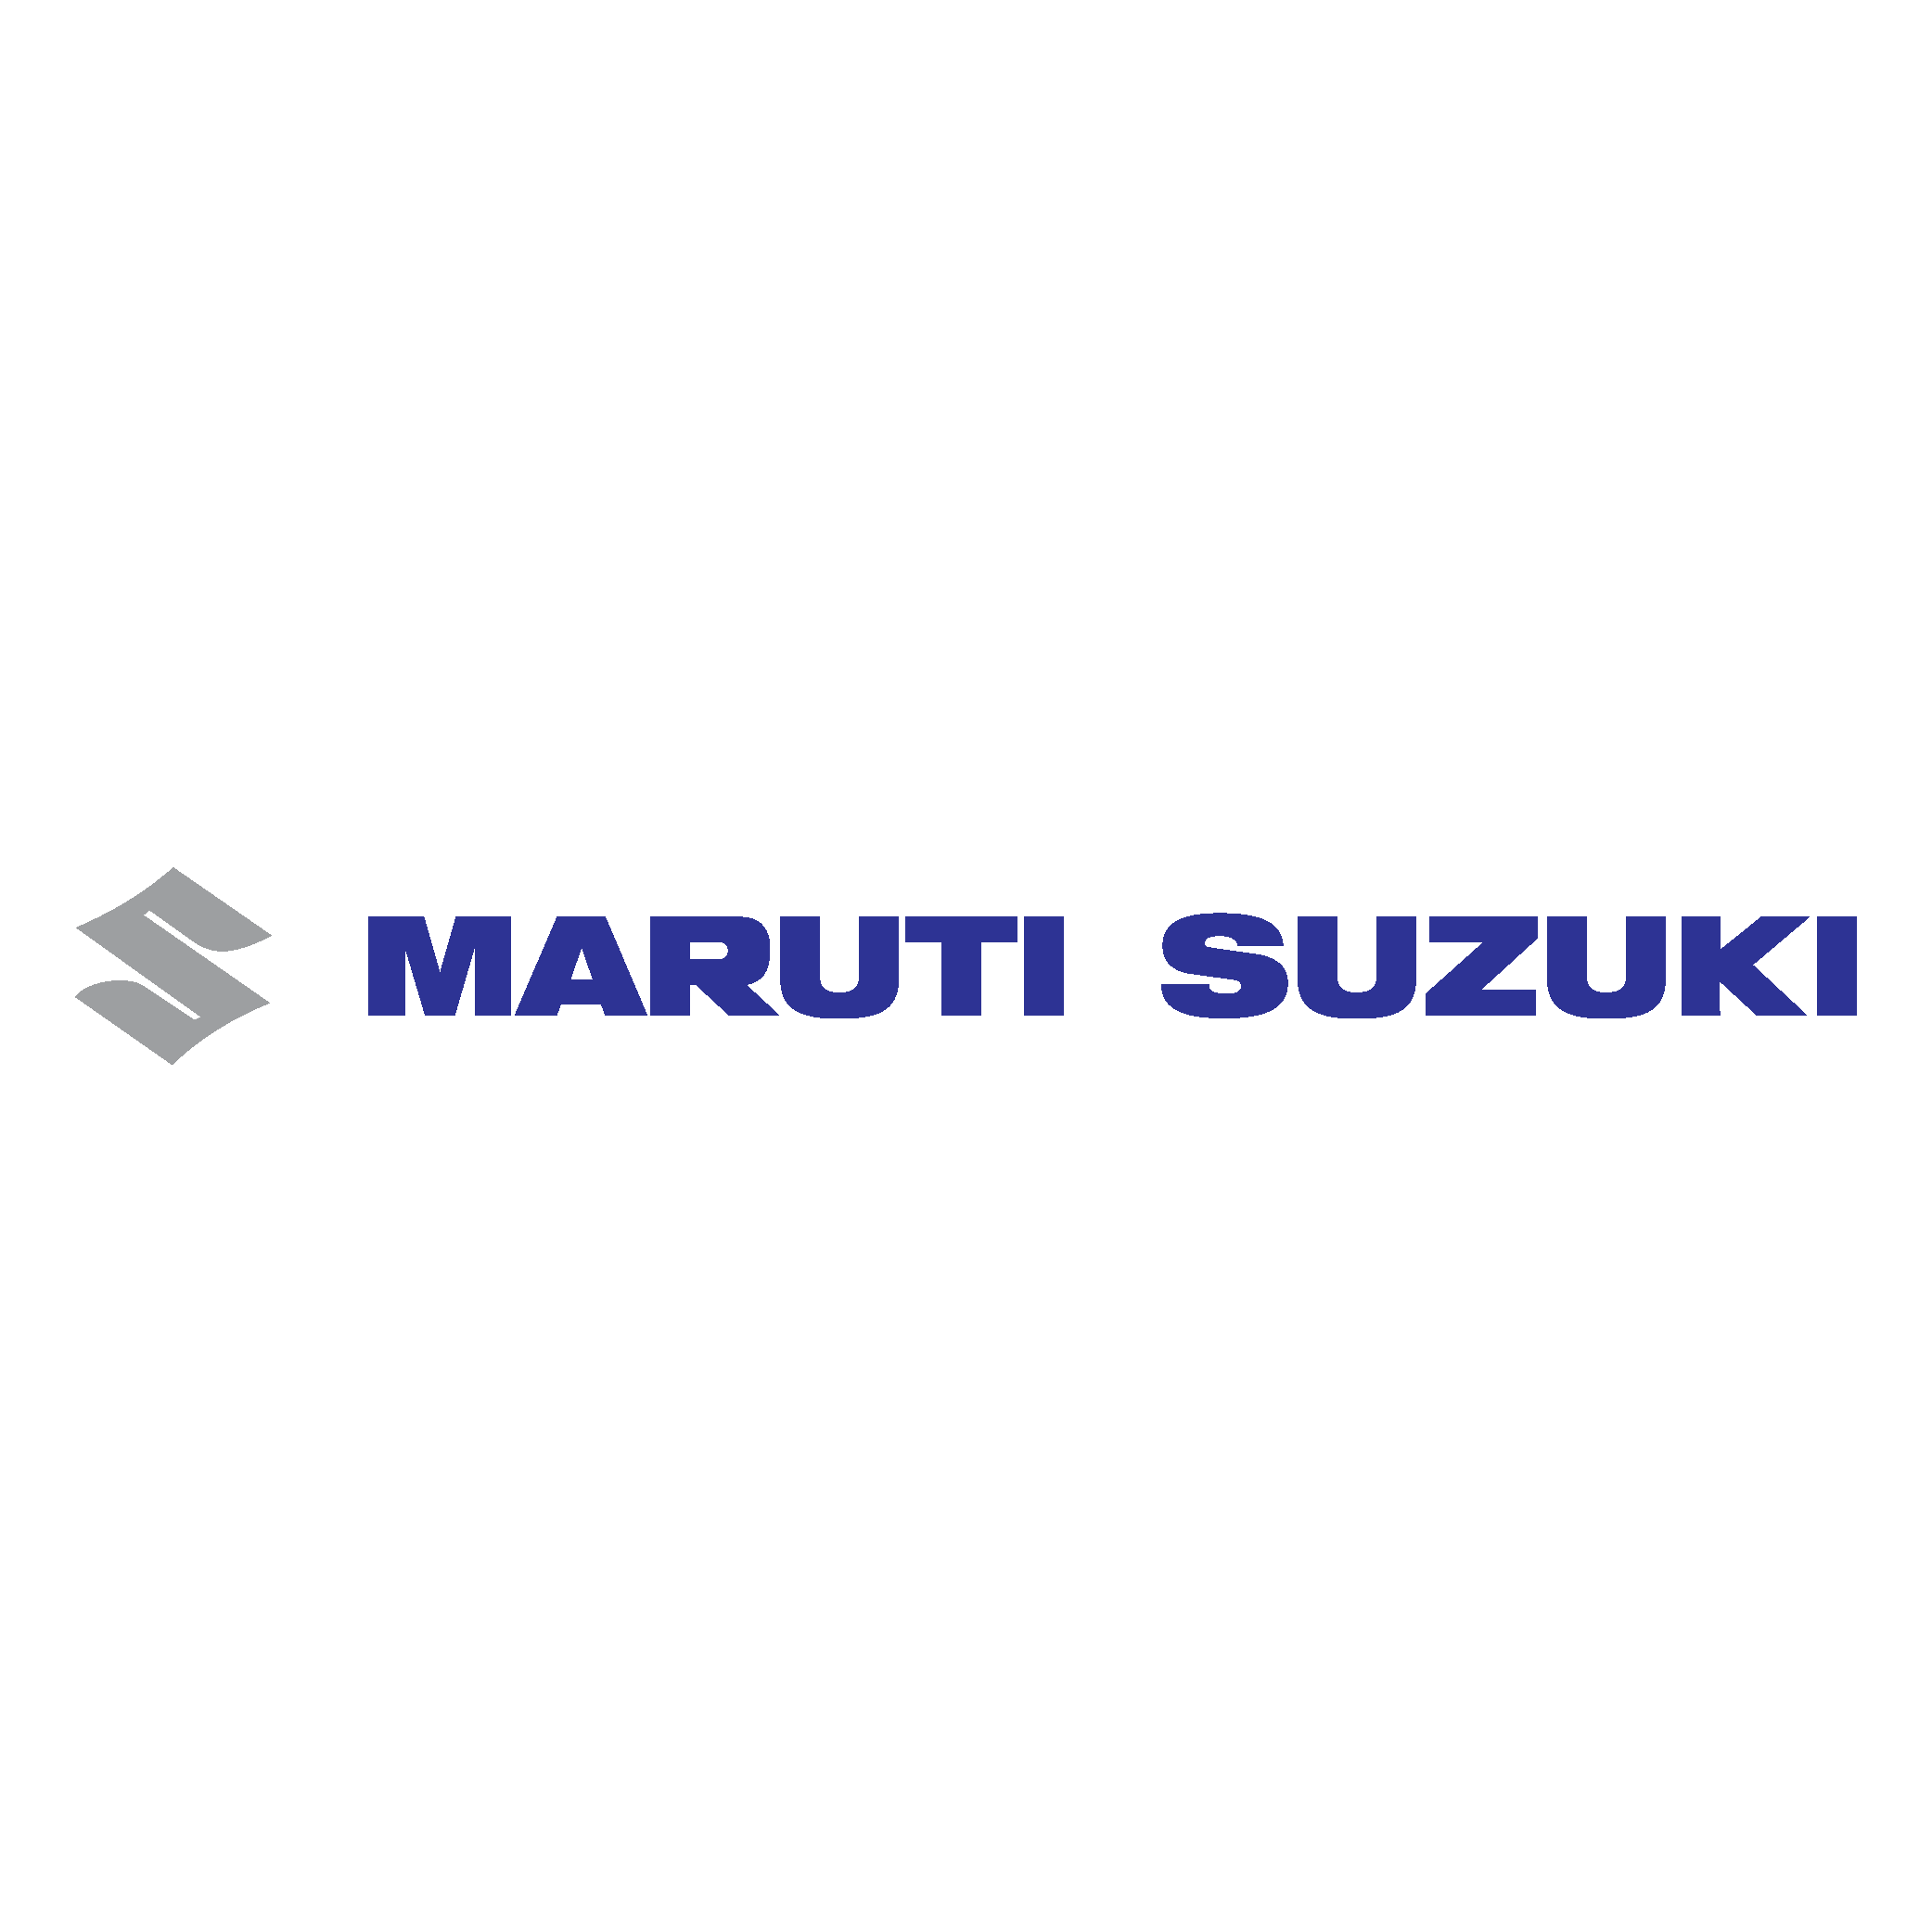 What is Maruti Suzuki’s business model?